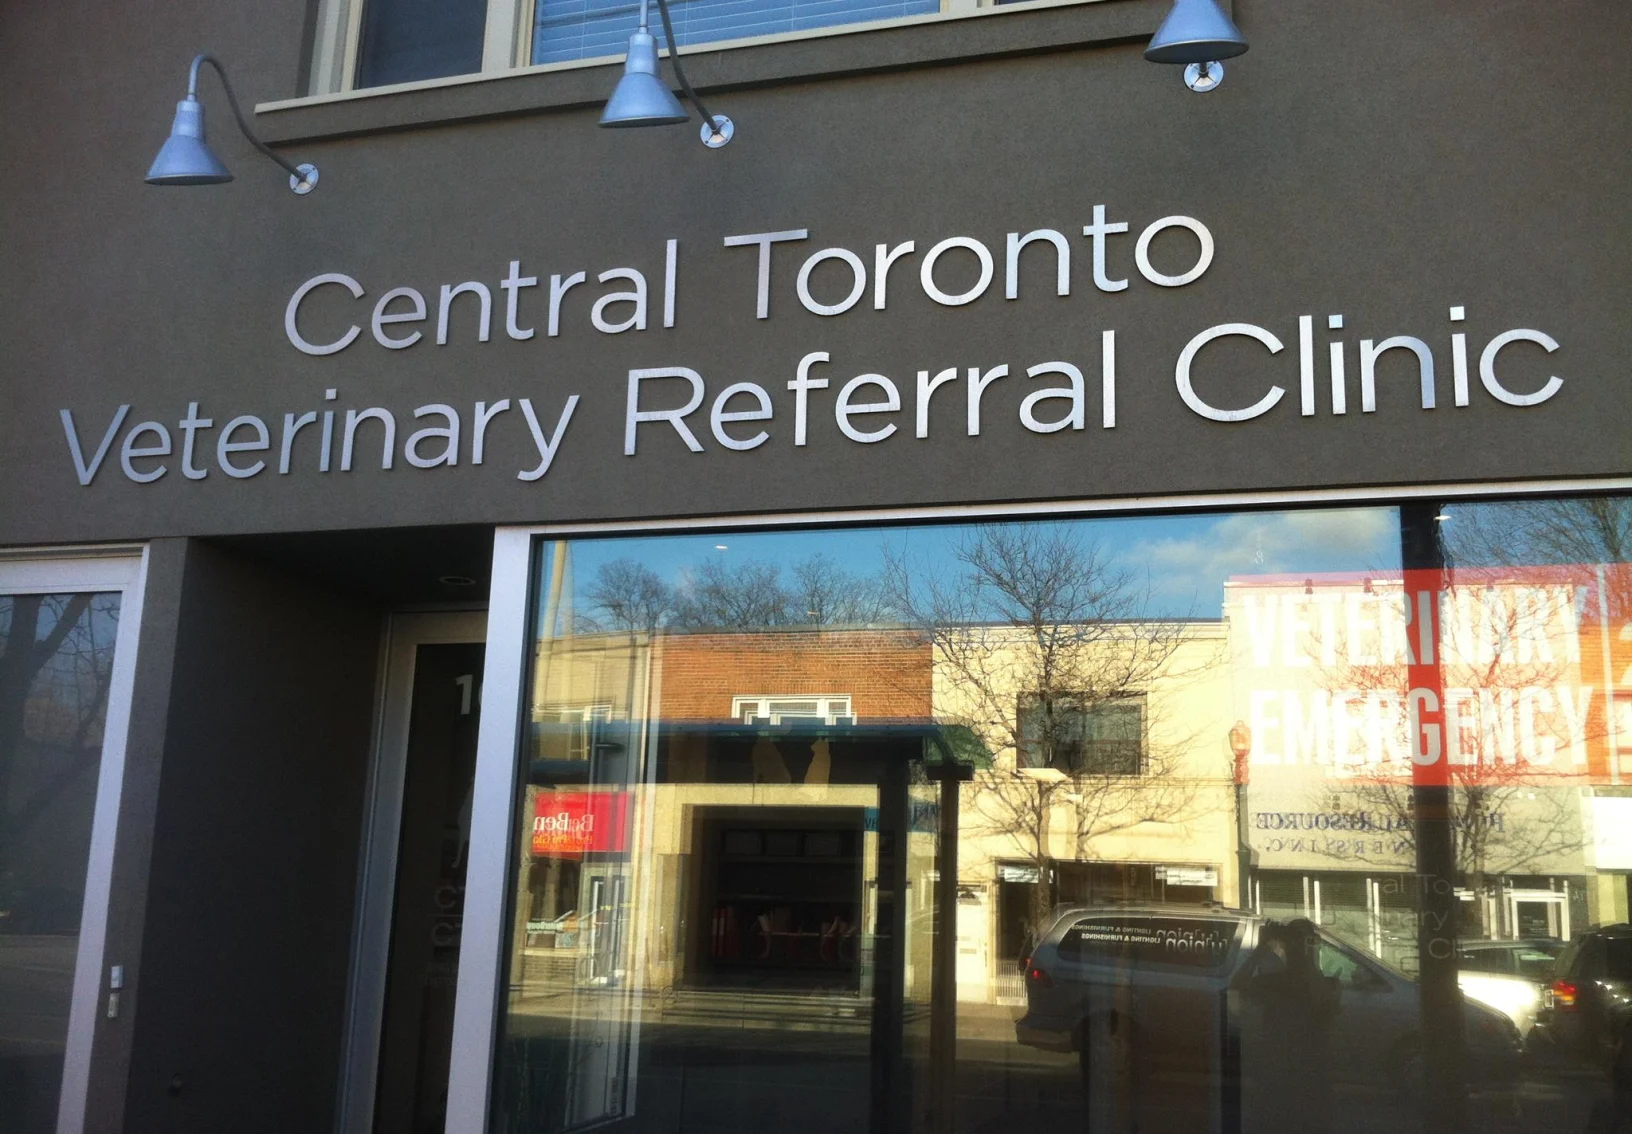 Central Toronto Veterinary Referral Clinic Building